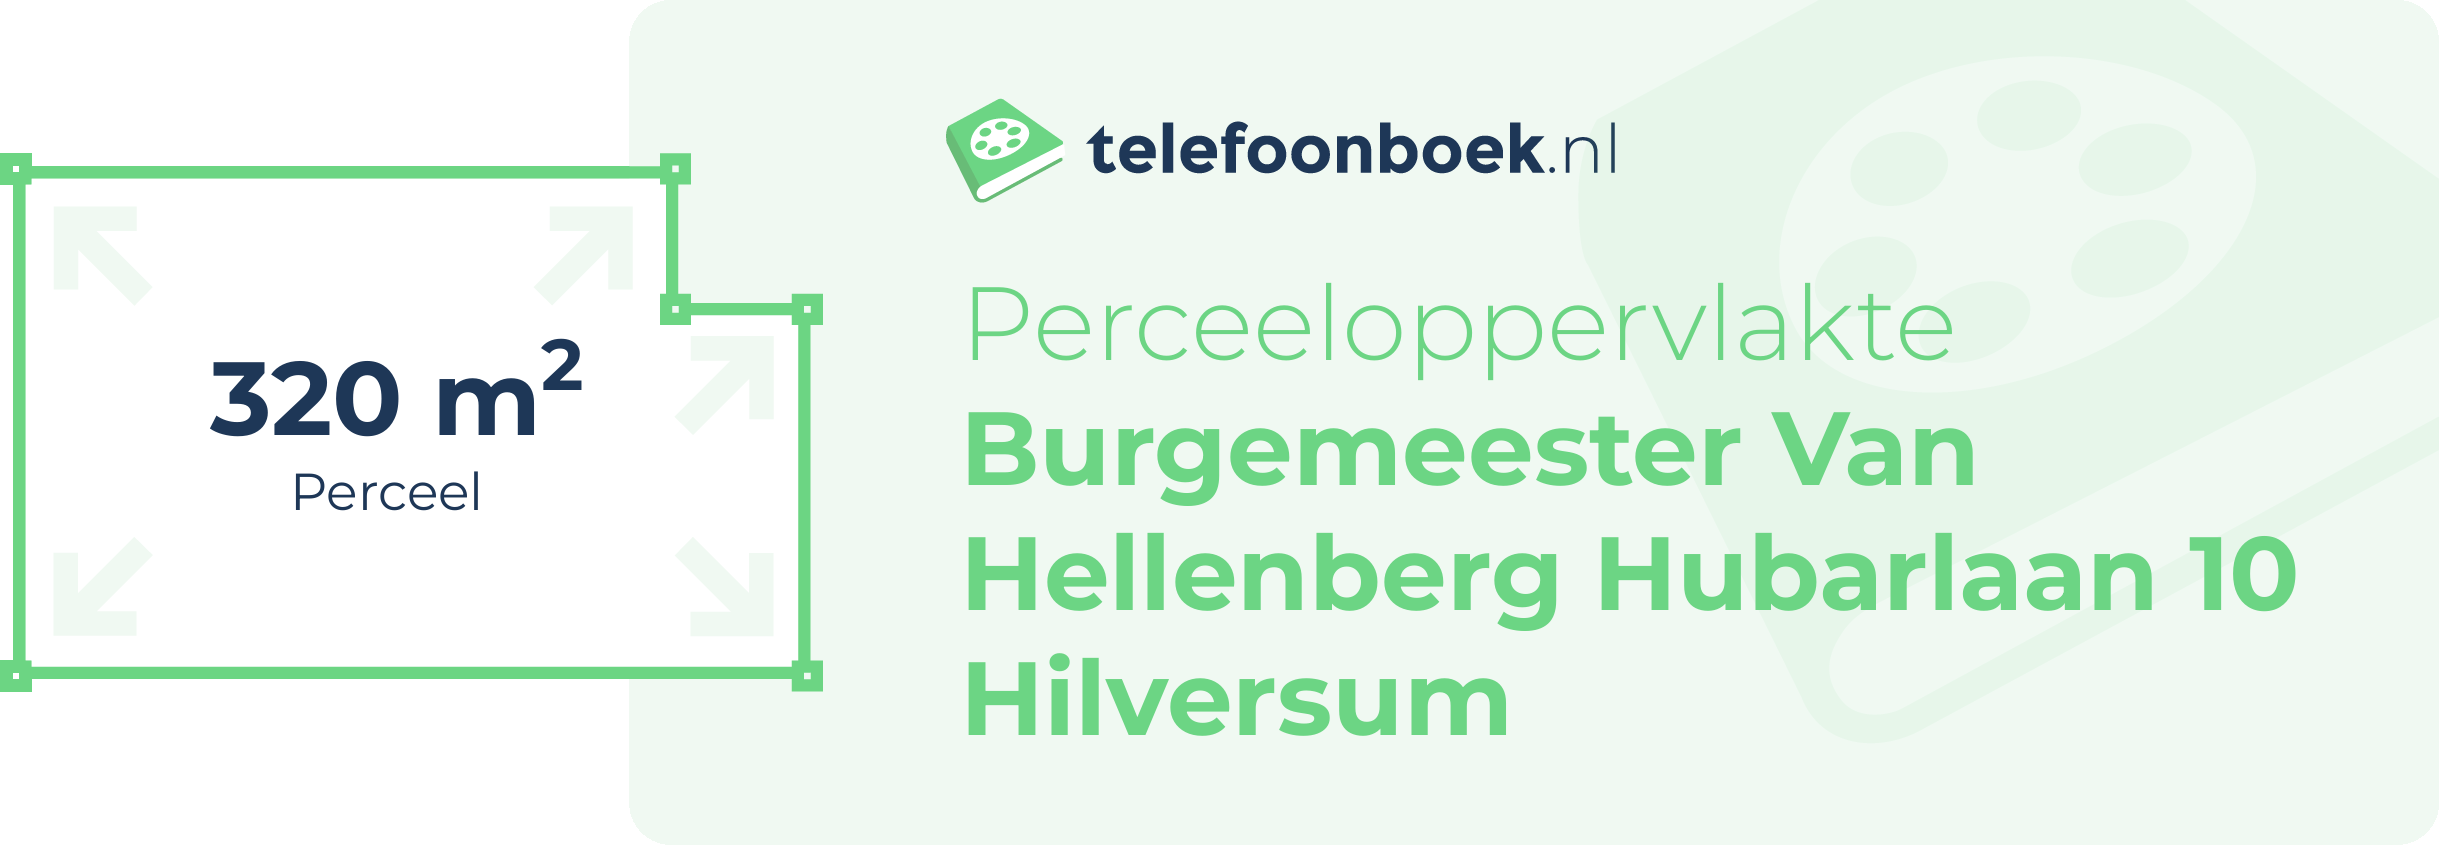 Perceeloppervlakte Burgemeester Van Hellenberg Hubarlaan 10 Hilversum